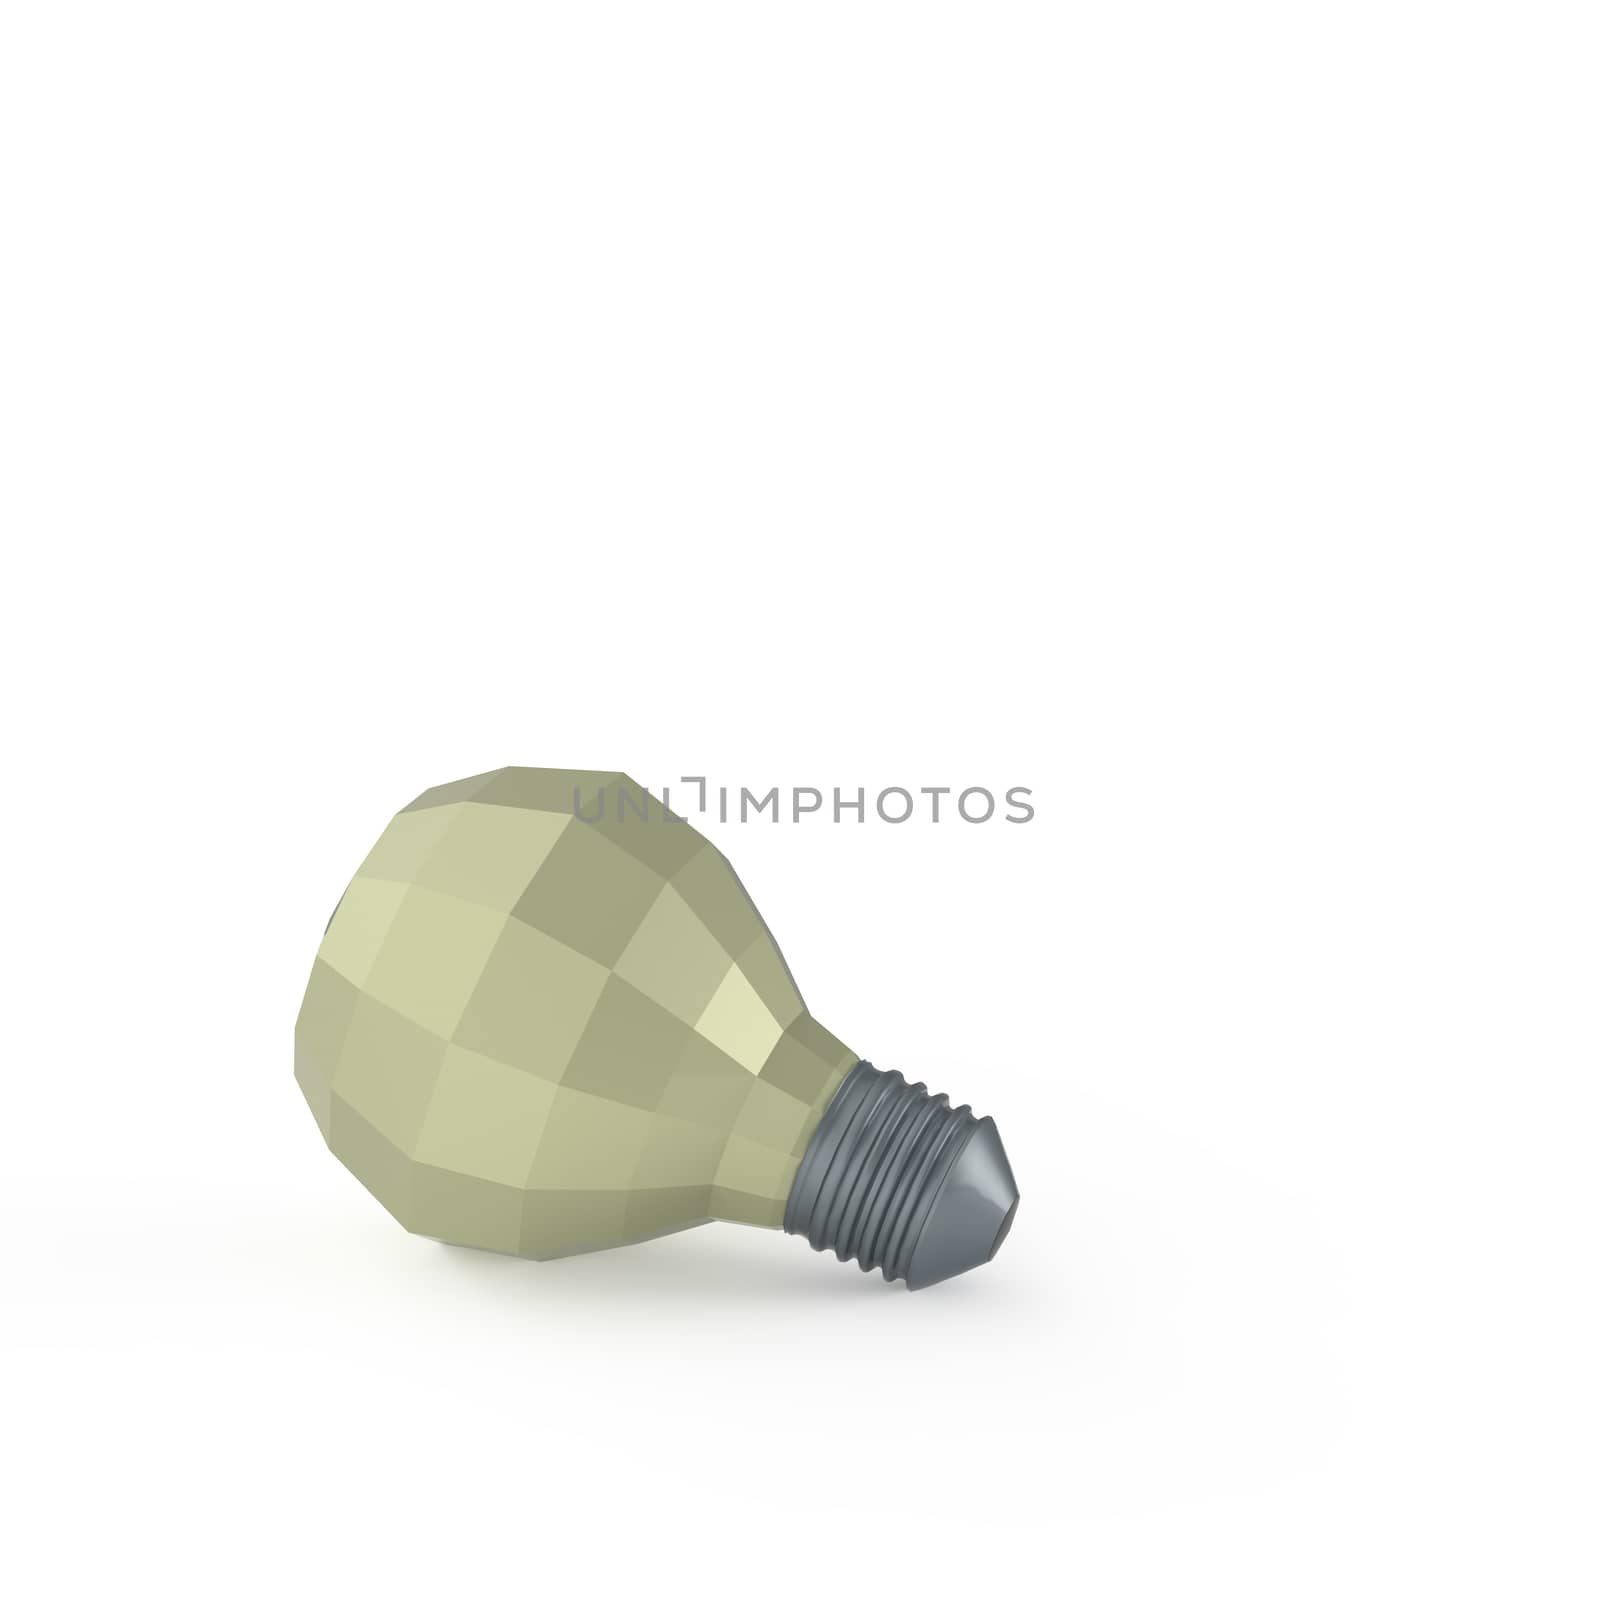 low polygonal 3d light bulb concept symbol